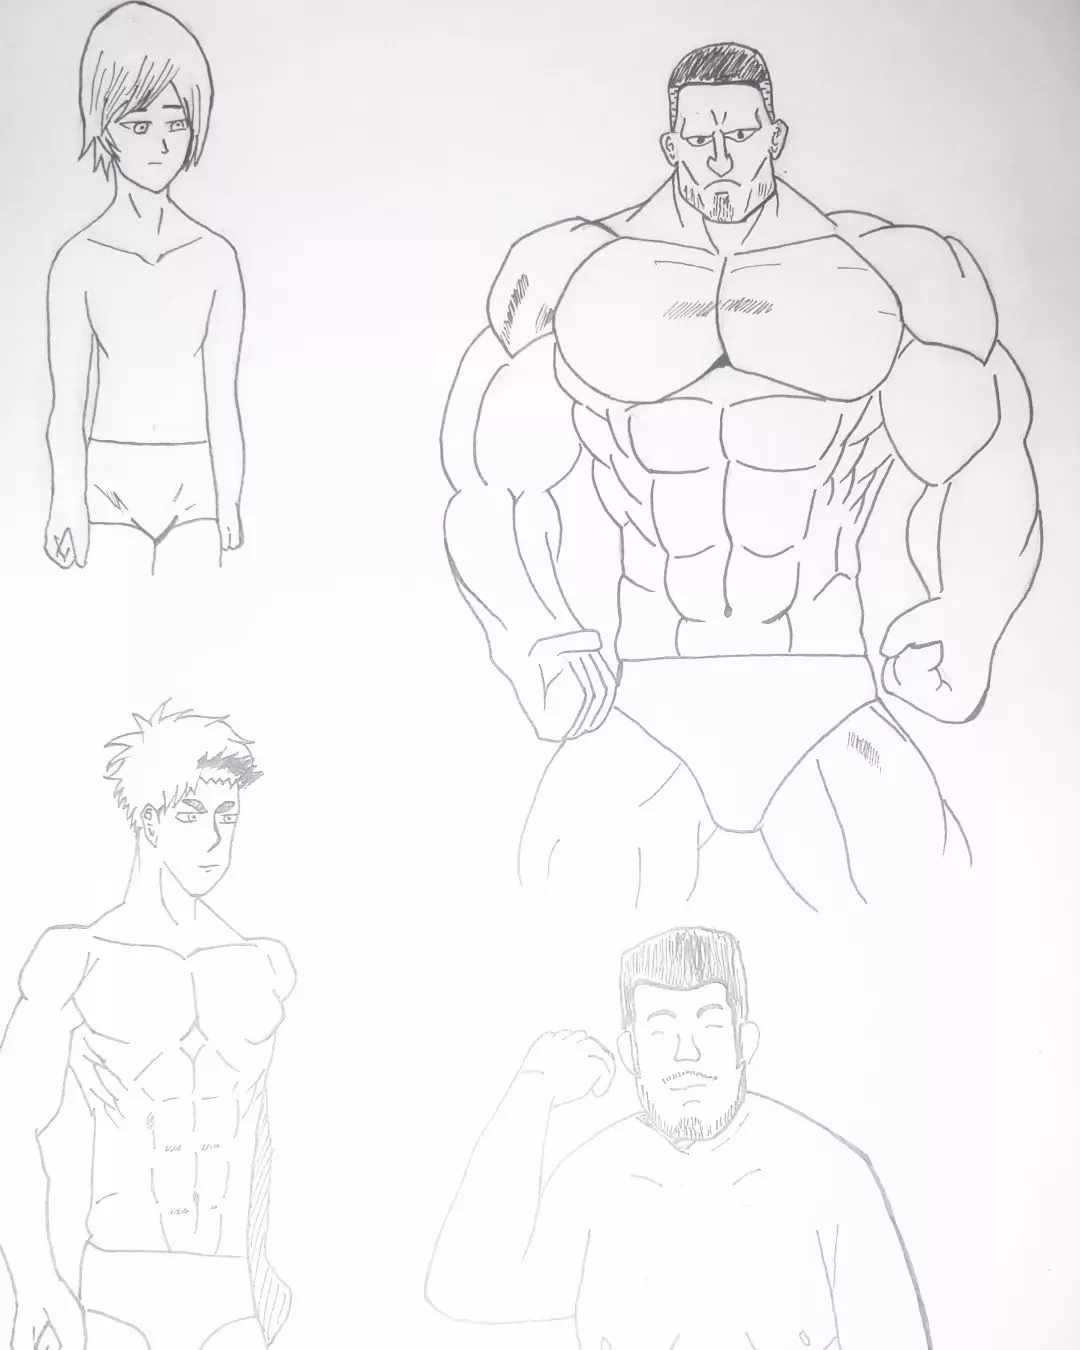 4 types of body